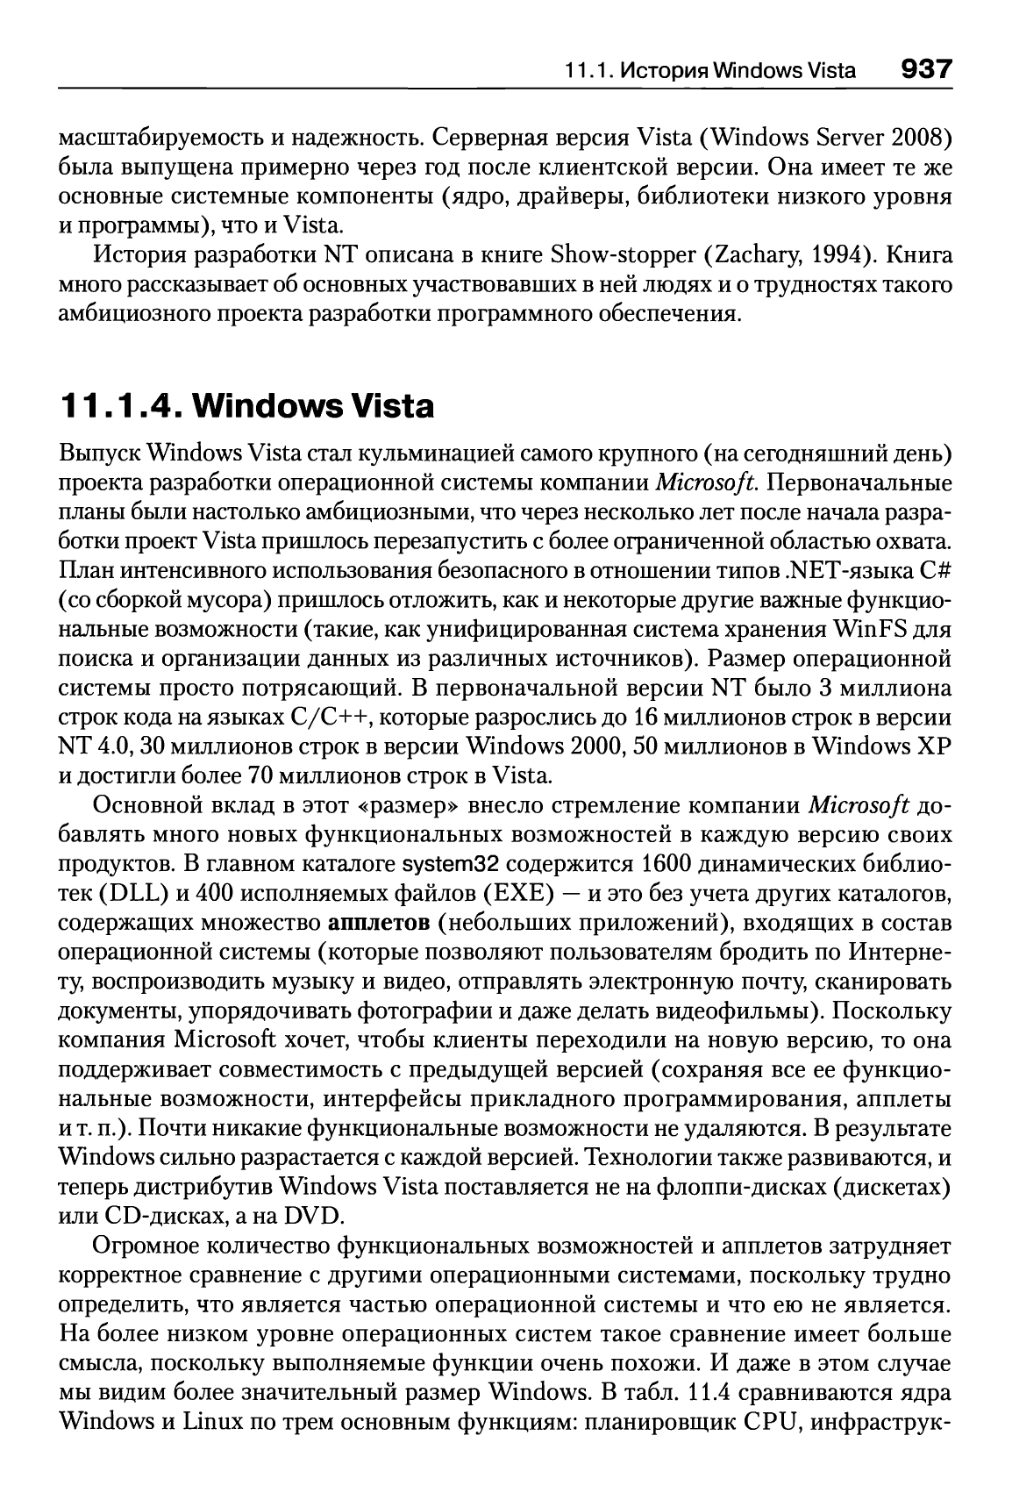 11.1.4. Windows Vista